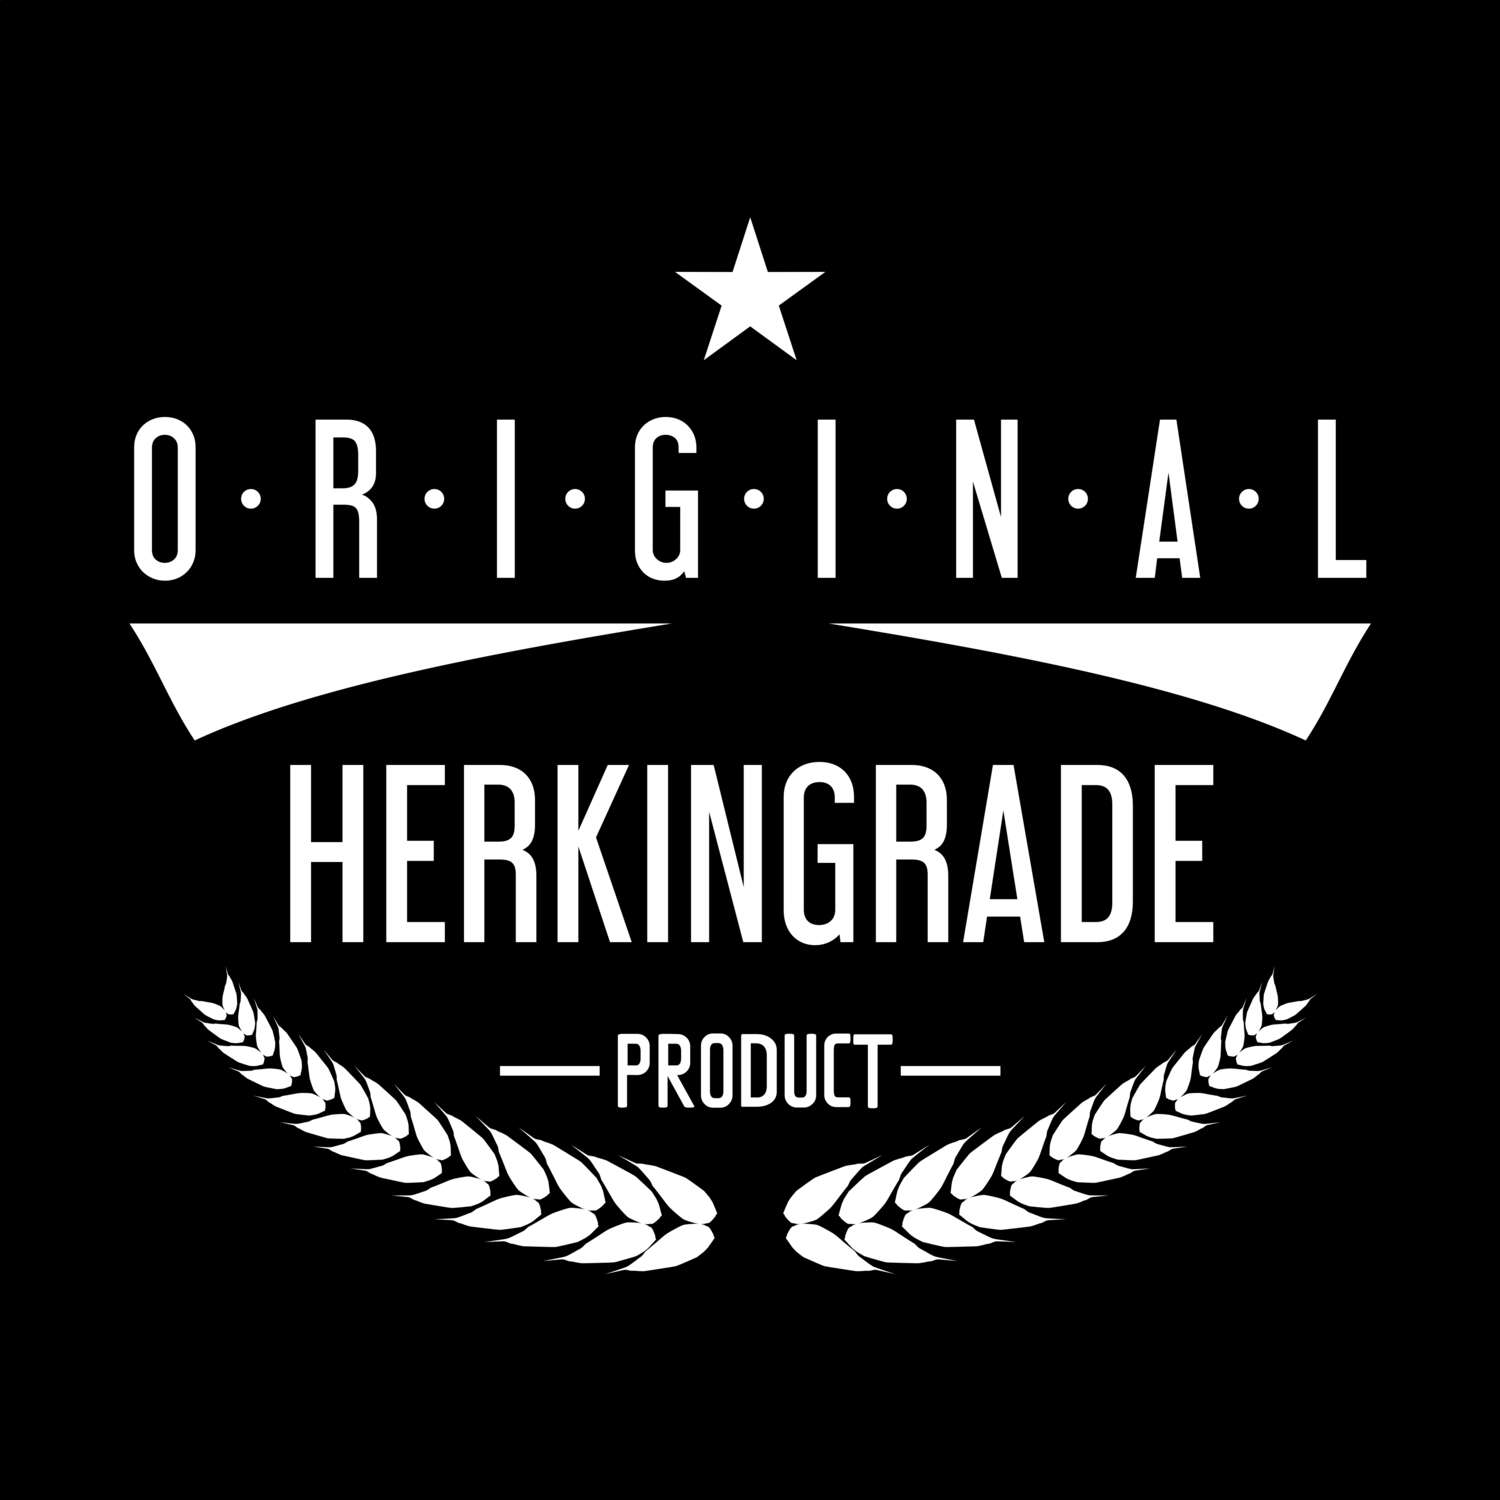 Herkingrade T-Shirt »Original Product«